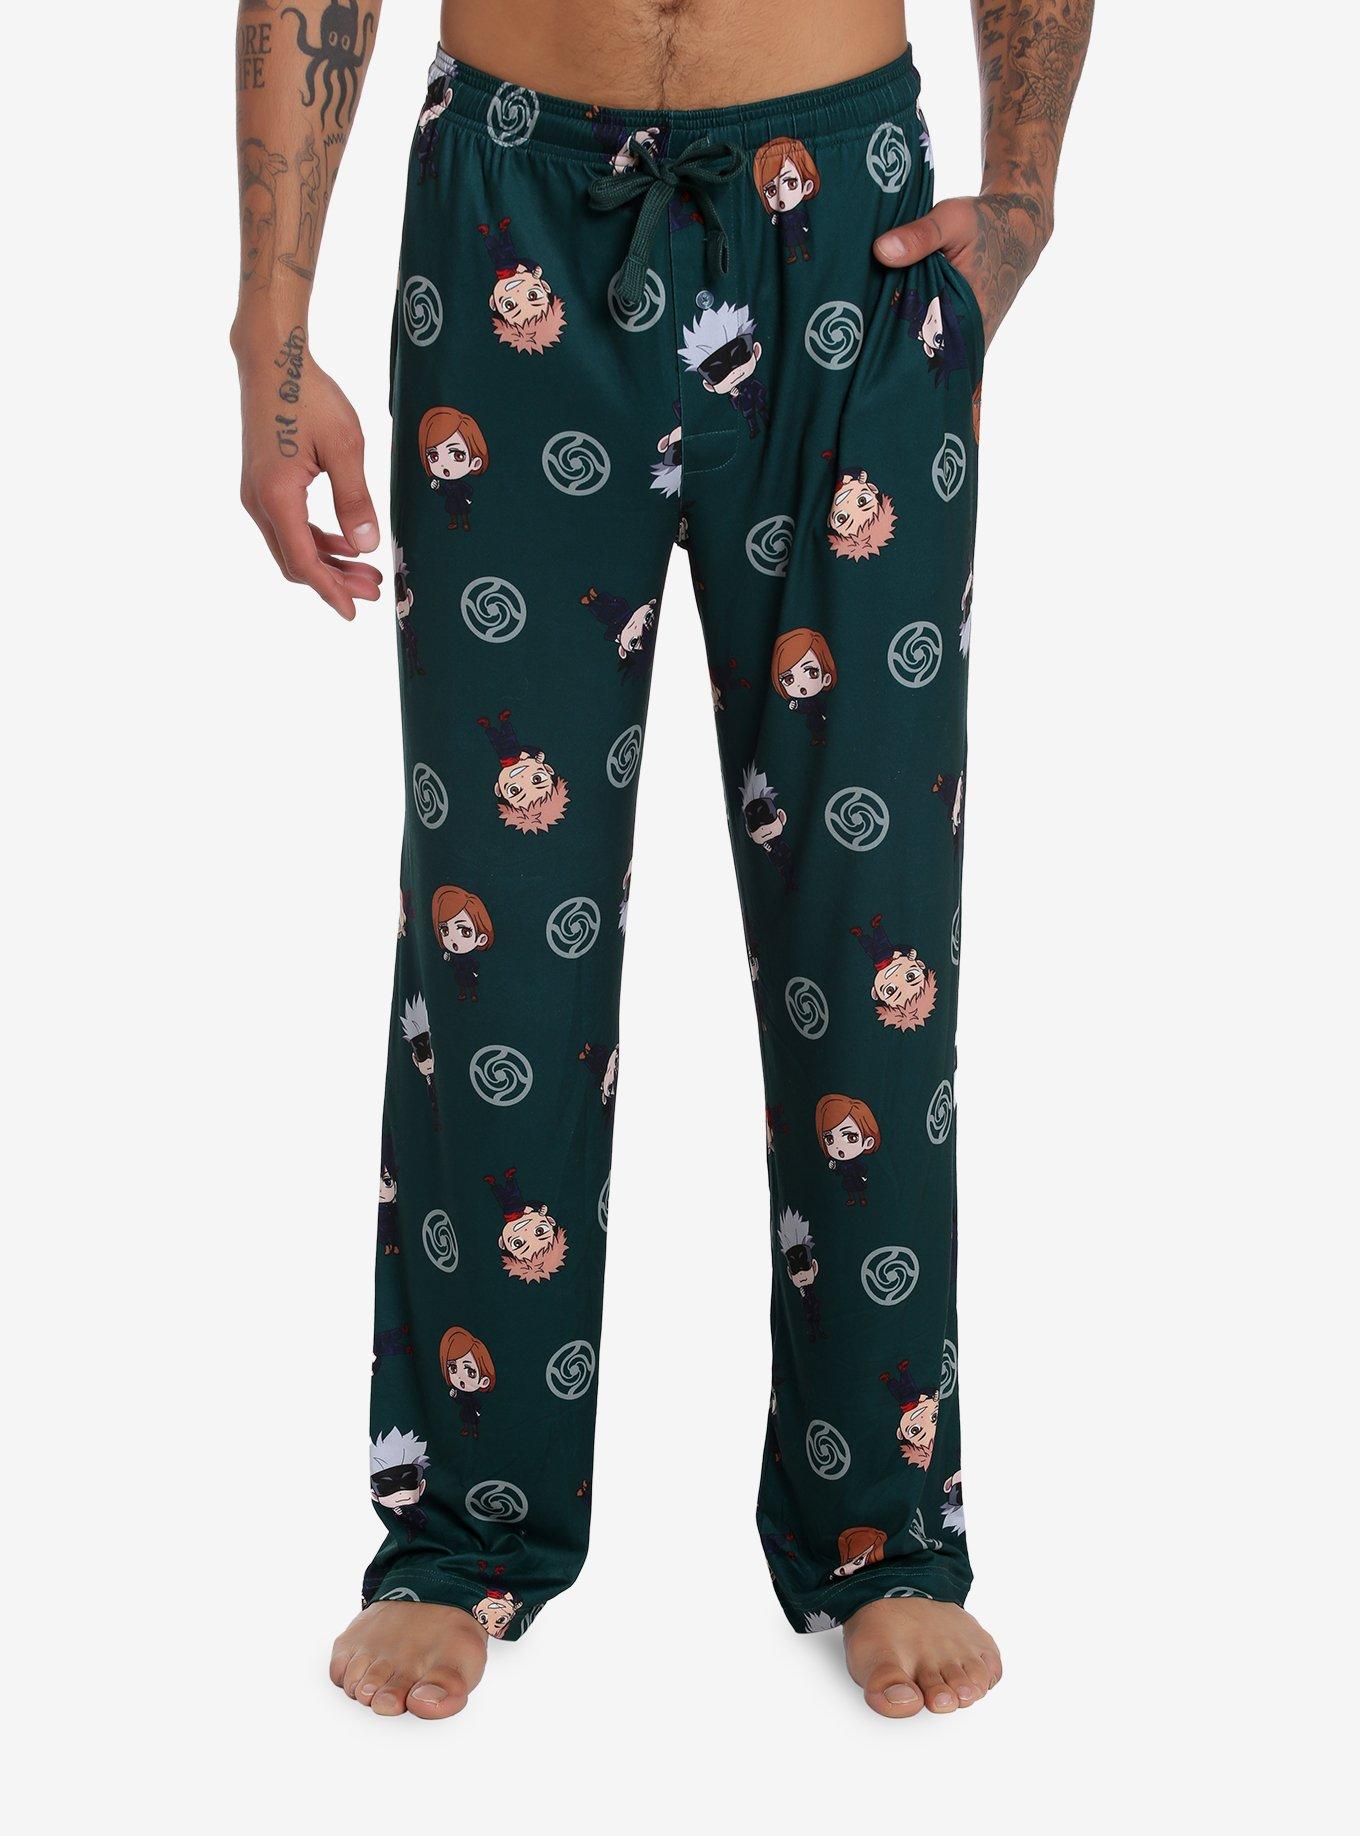 My Hero Academia Character & Logo Pajama Pants Plus Size Size 3X Hot Topic  NWT